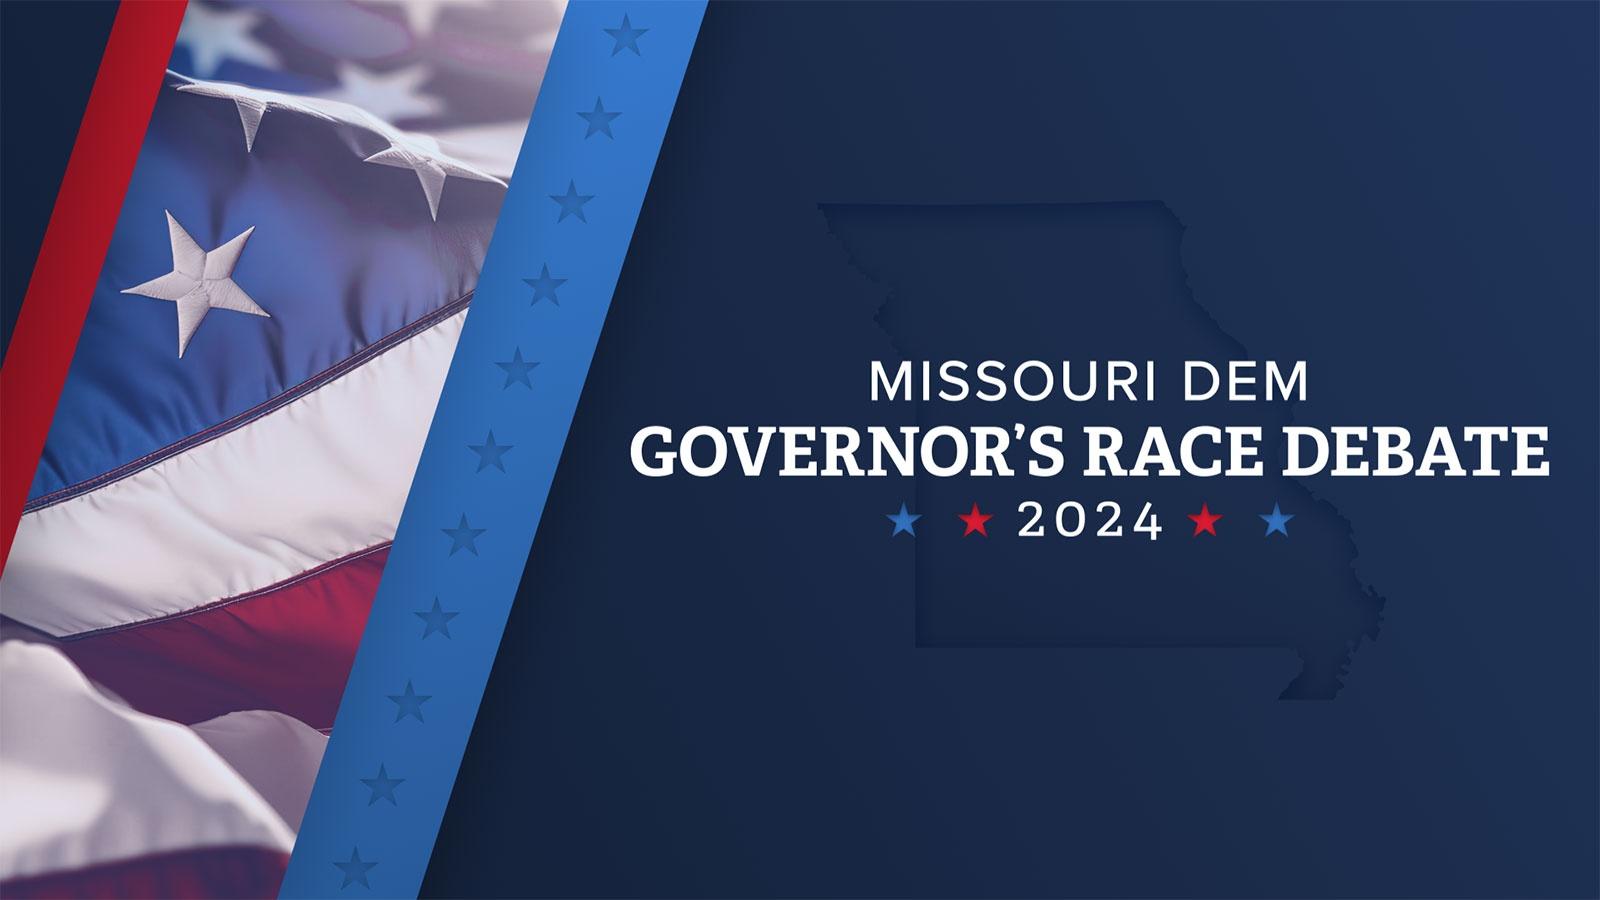 American Flag detail, Missouri DEM Governor's Race Debate 2024